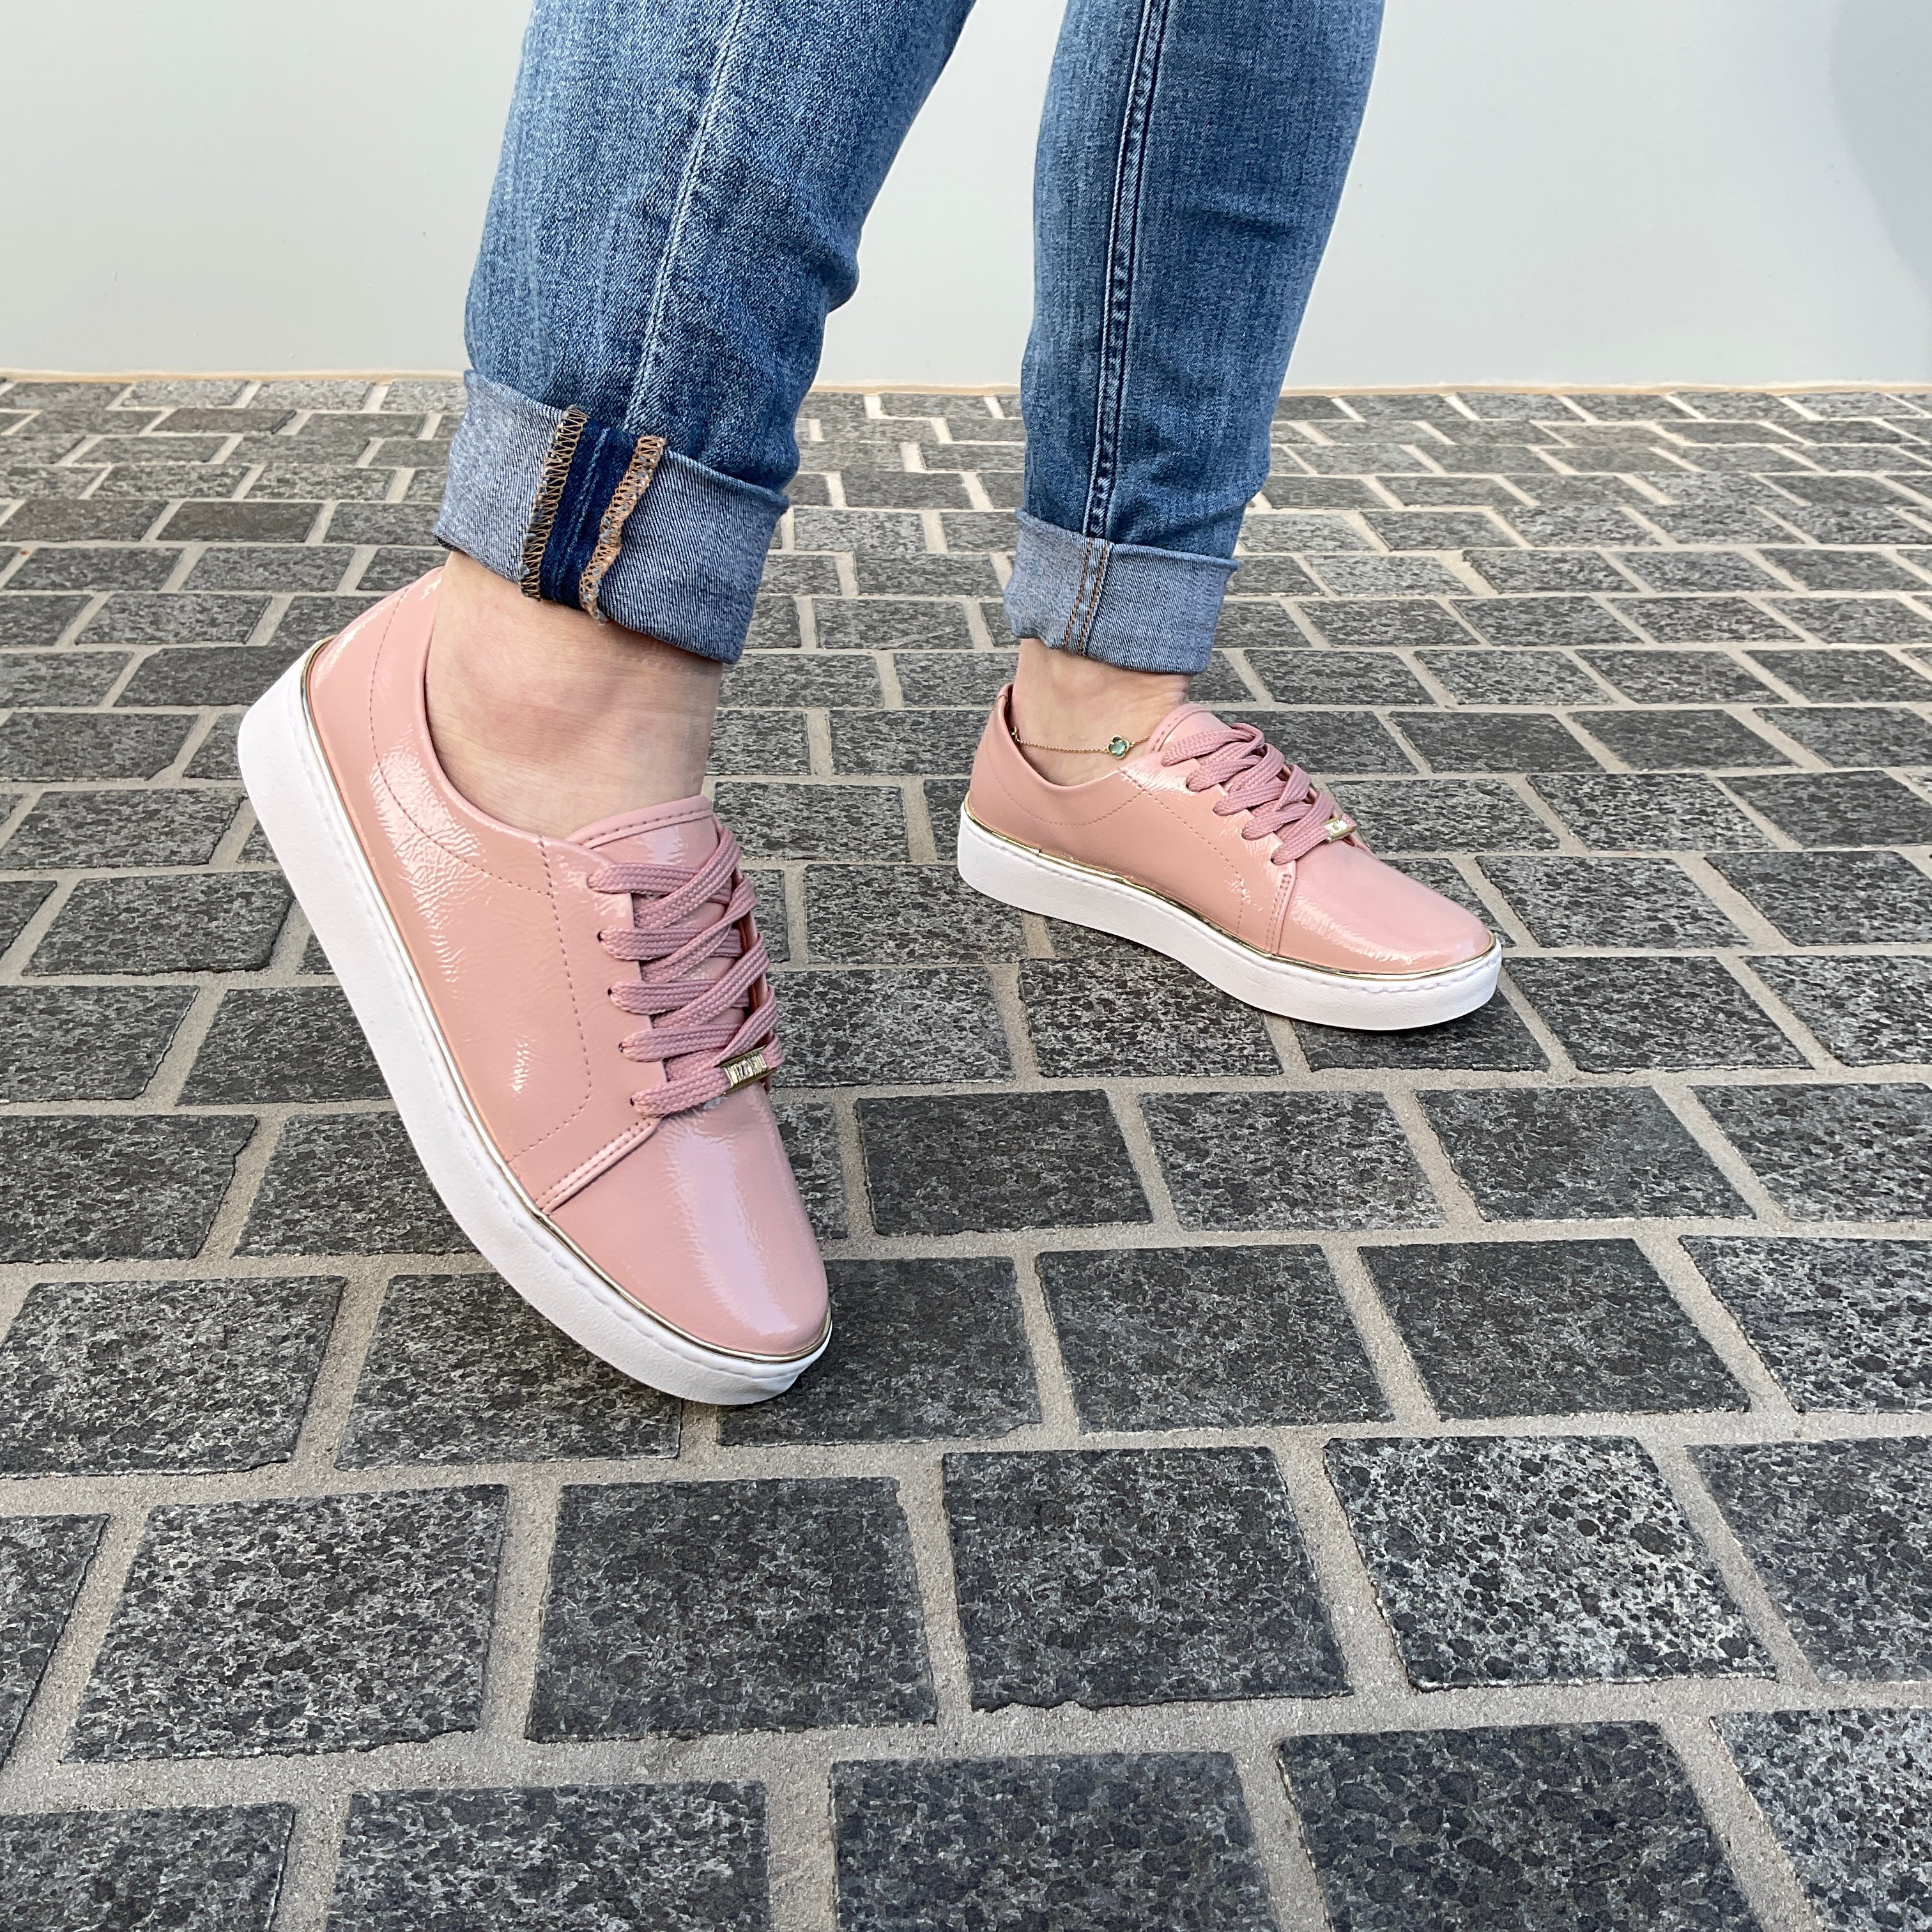 Vizzano 1214-105 Gold Rim Sneaker in Pastel Pink Patent